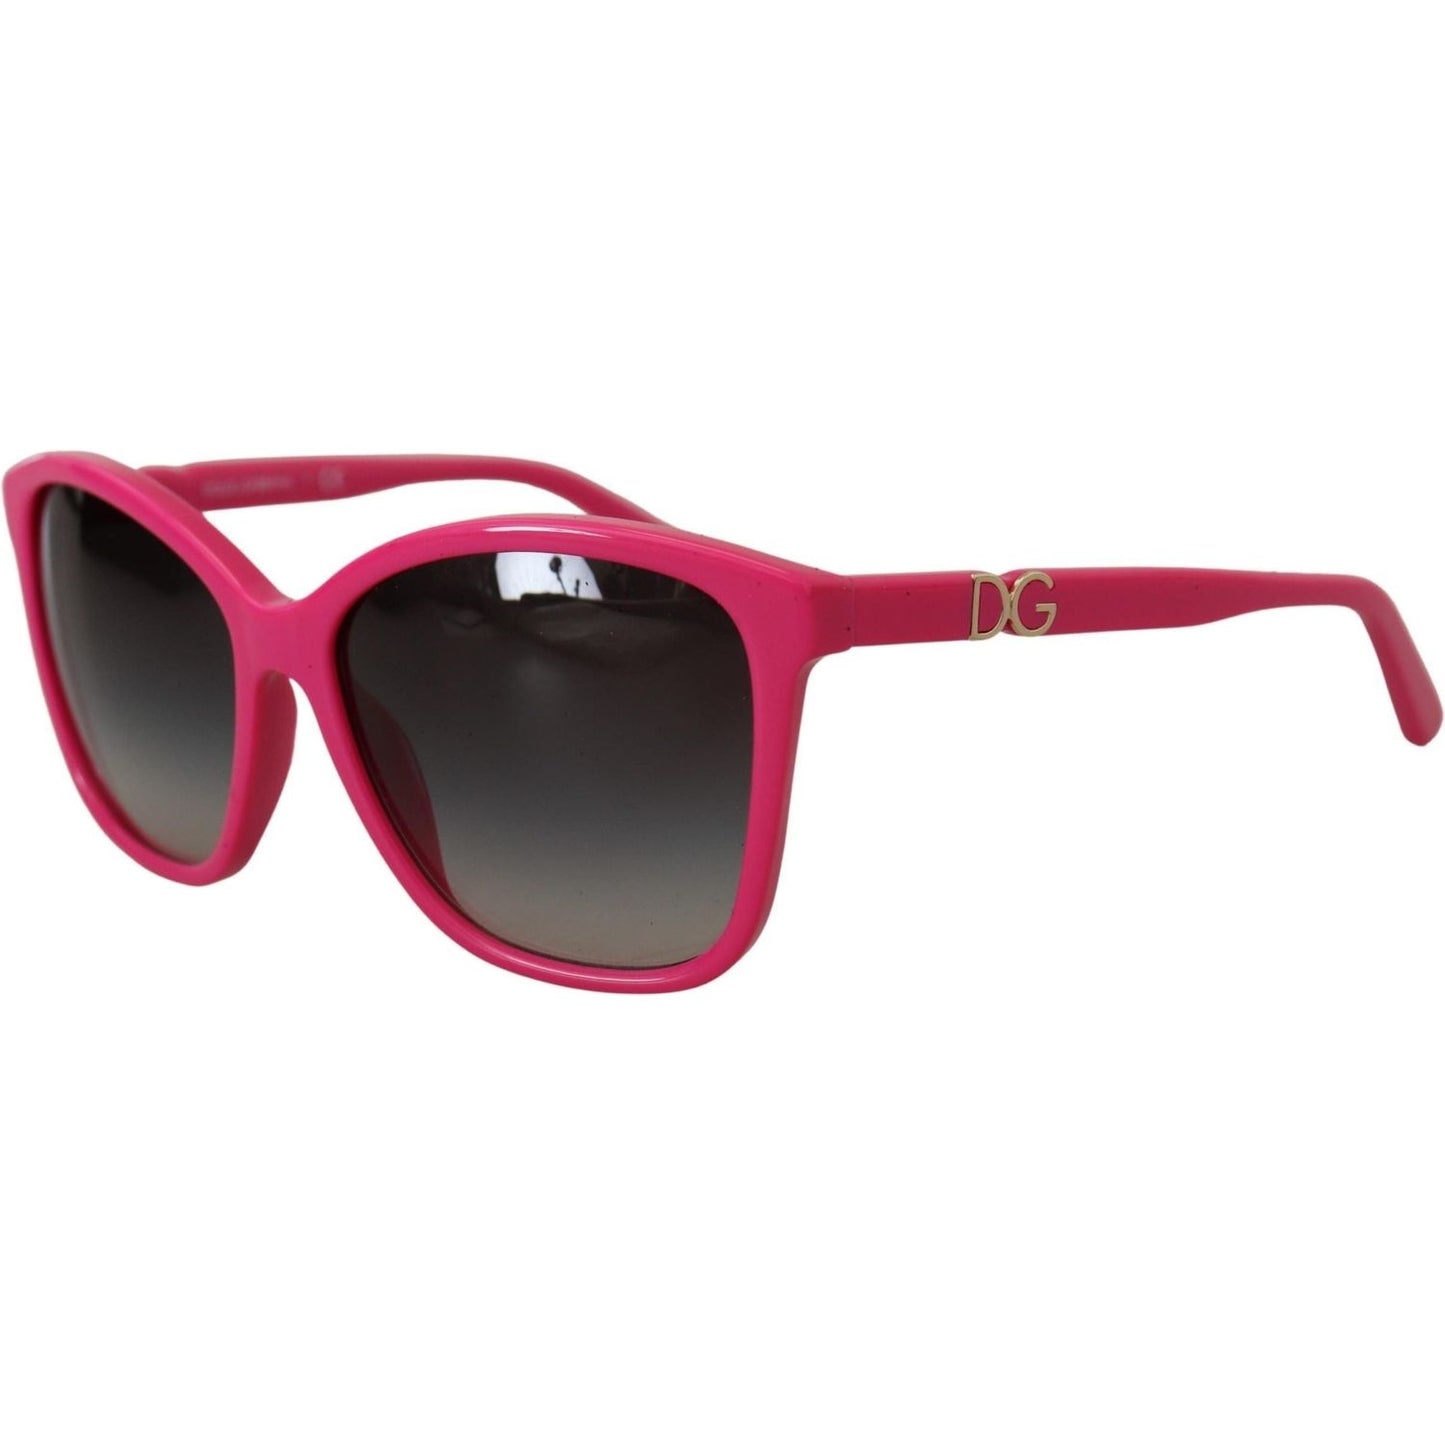 Dolce & Gabbana Elegant Pink Round Sunglasses for Women pink-acetate-frame-round-shades-dg4170m-women-sunglasses IMG_4605-scaled-bbd2772d-1a3.jpg